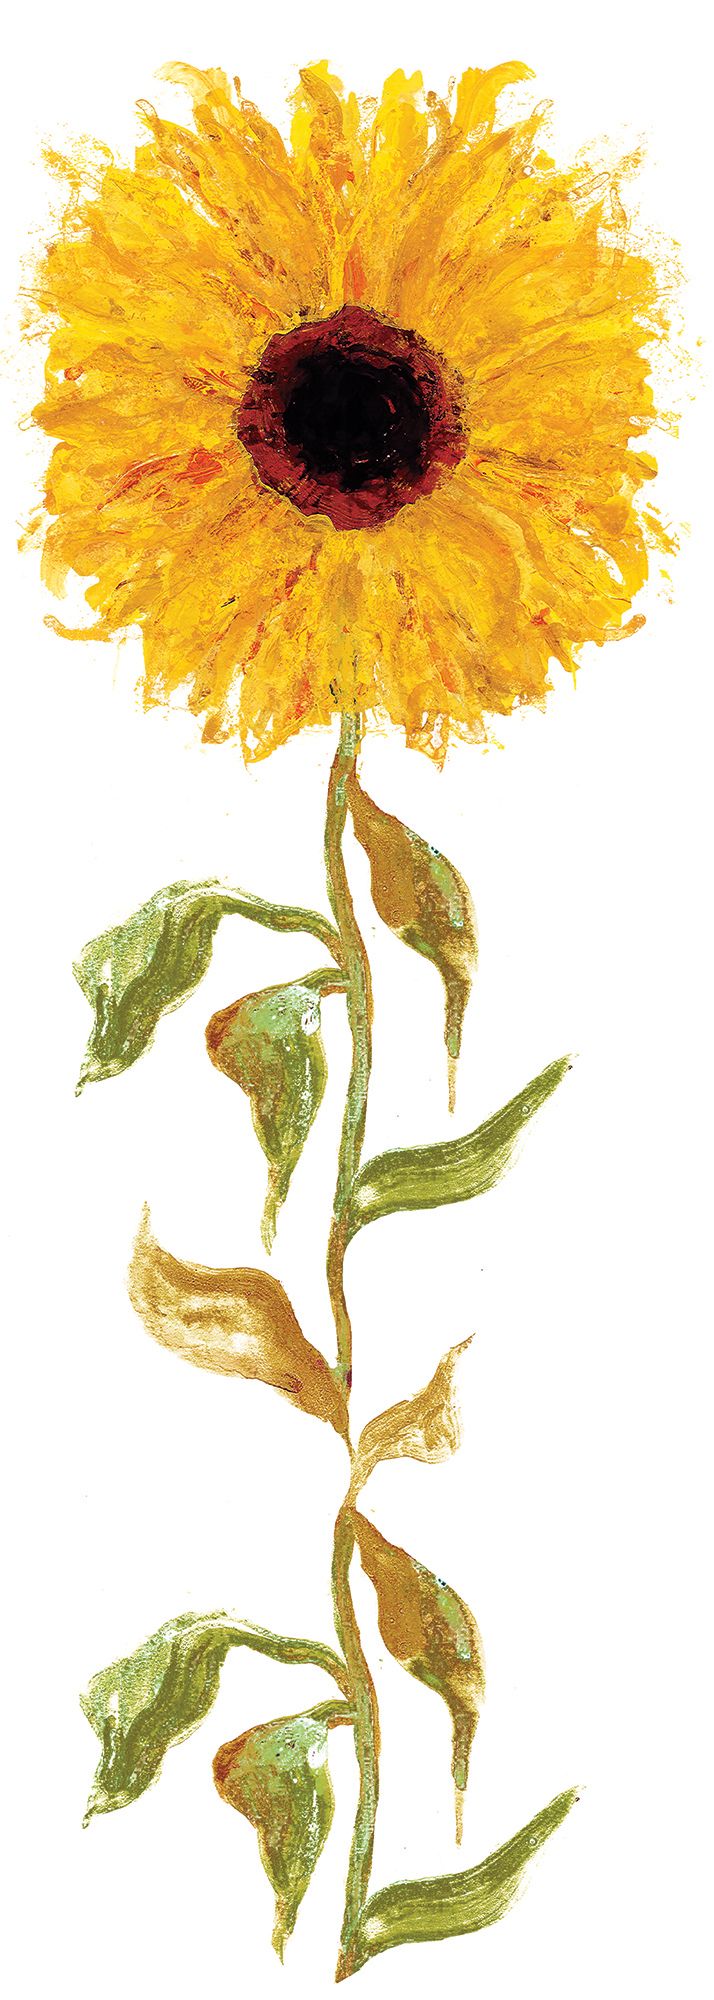 Sunflower by Gavin Dobson